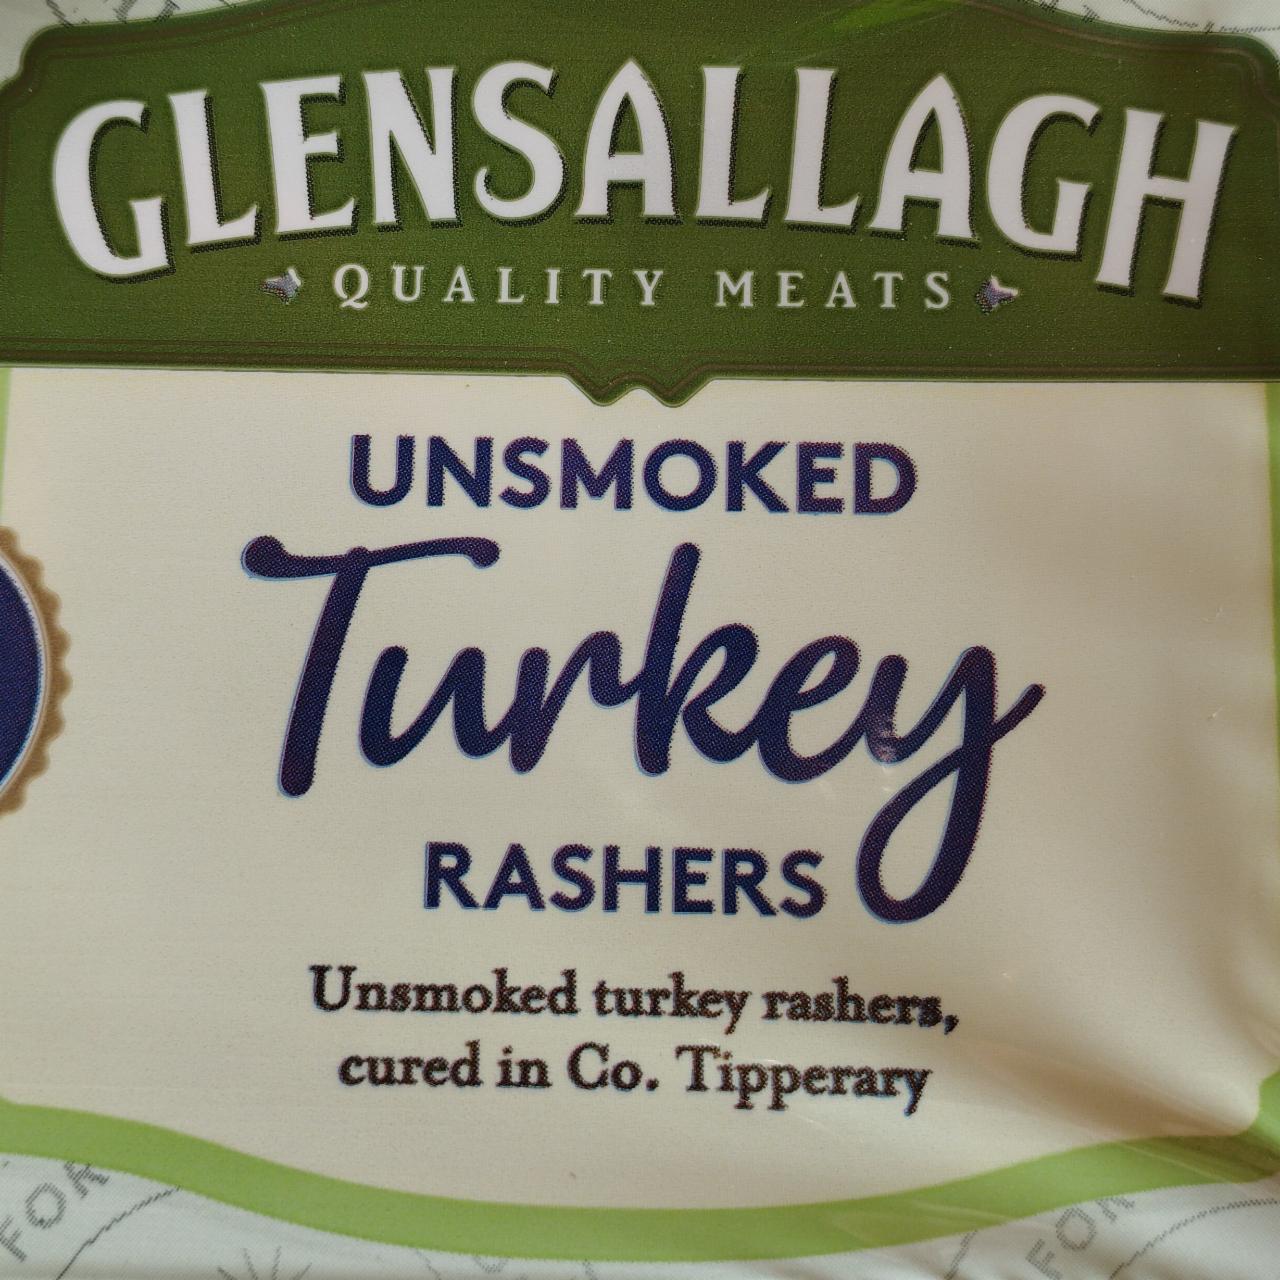 Fotografie - Unsmoked turkey rashers Glensallagh